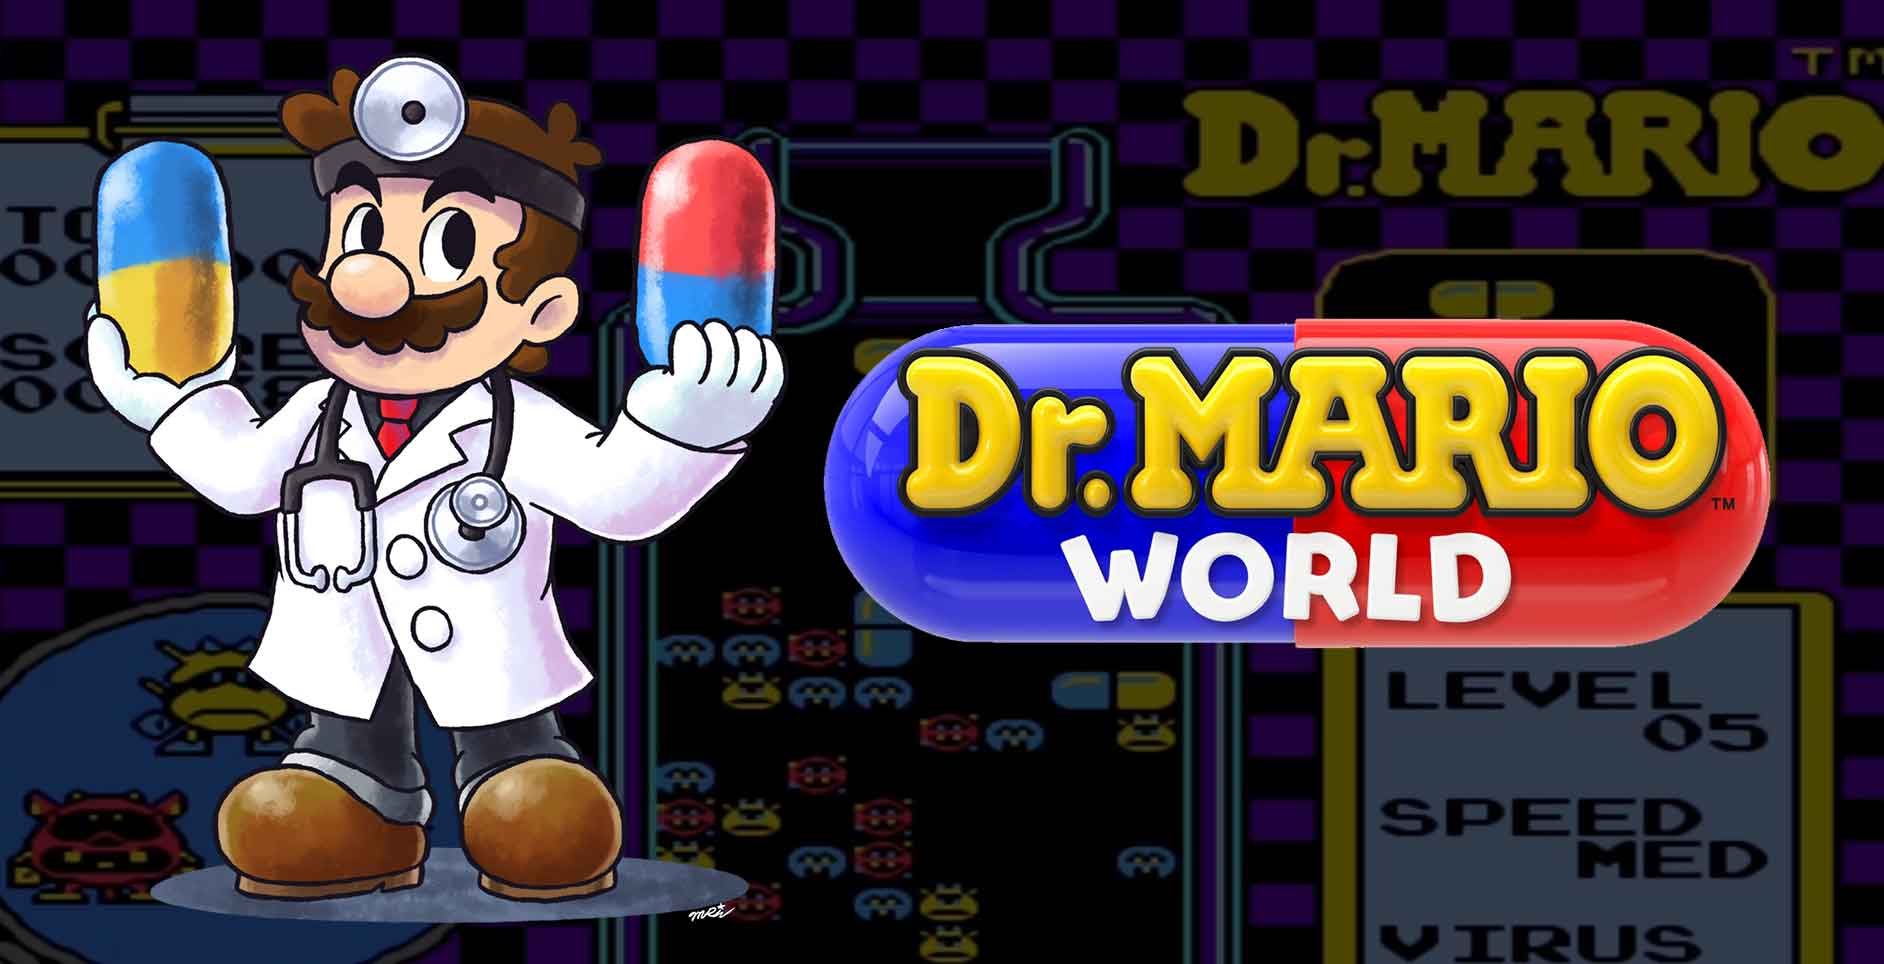 Nintendo announces Dr. Mario World mobile game | GameConnect